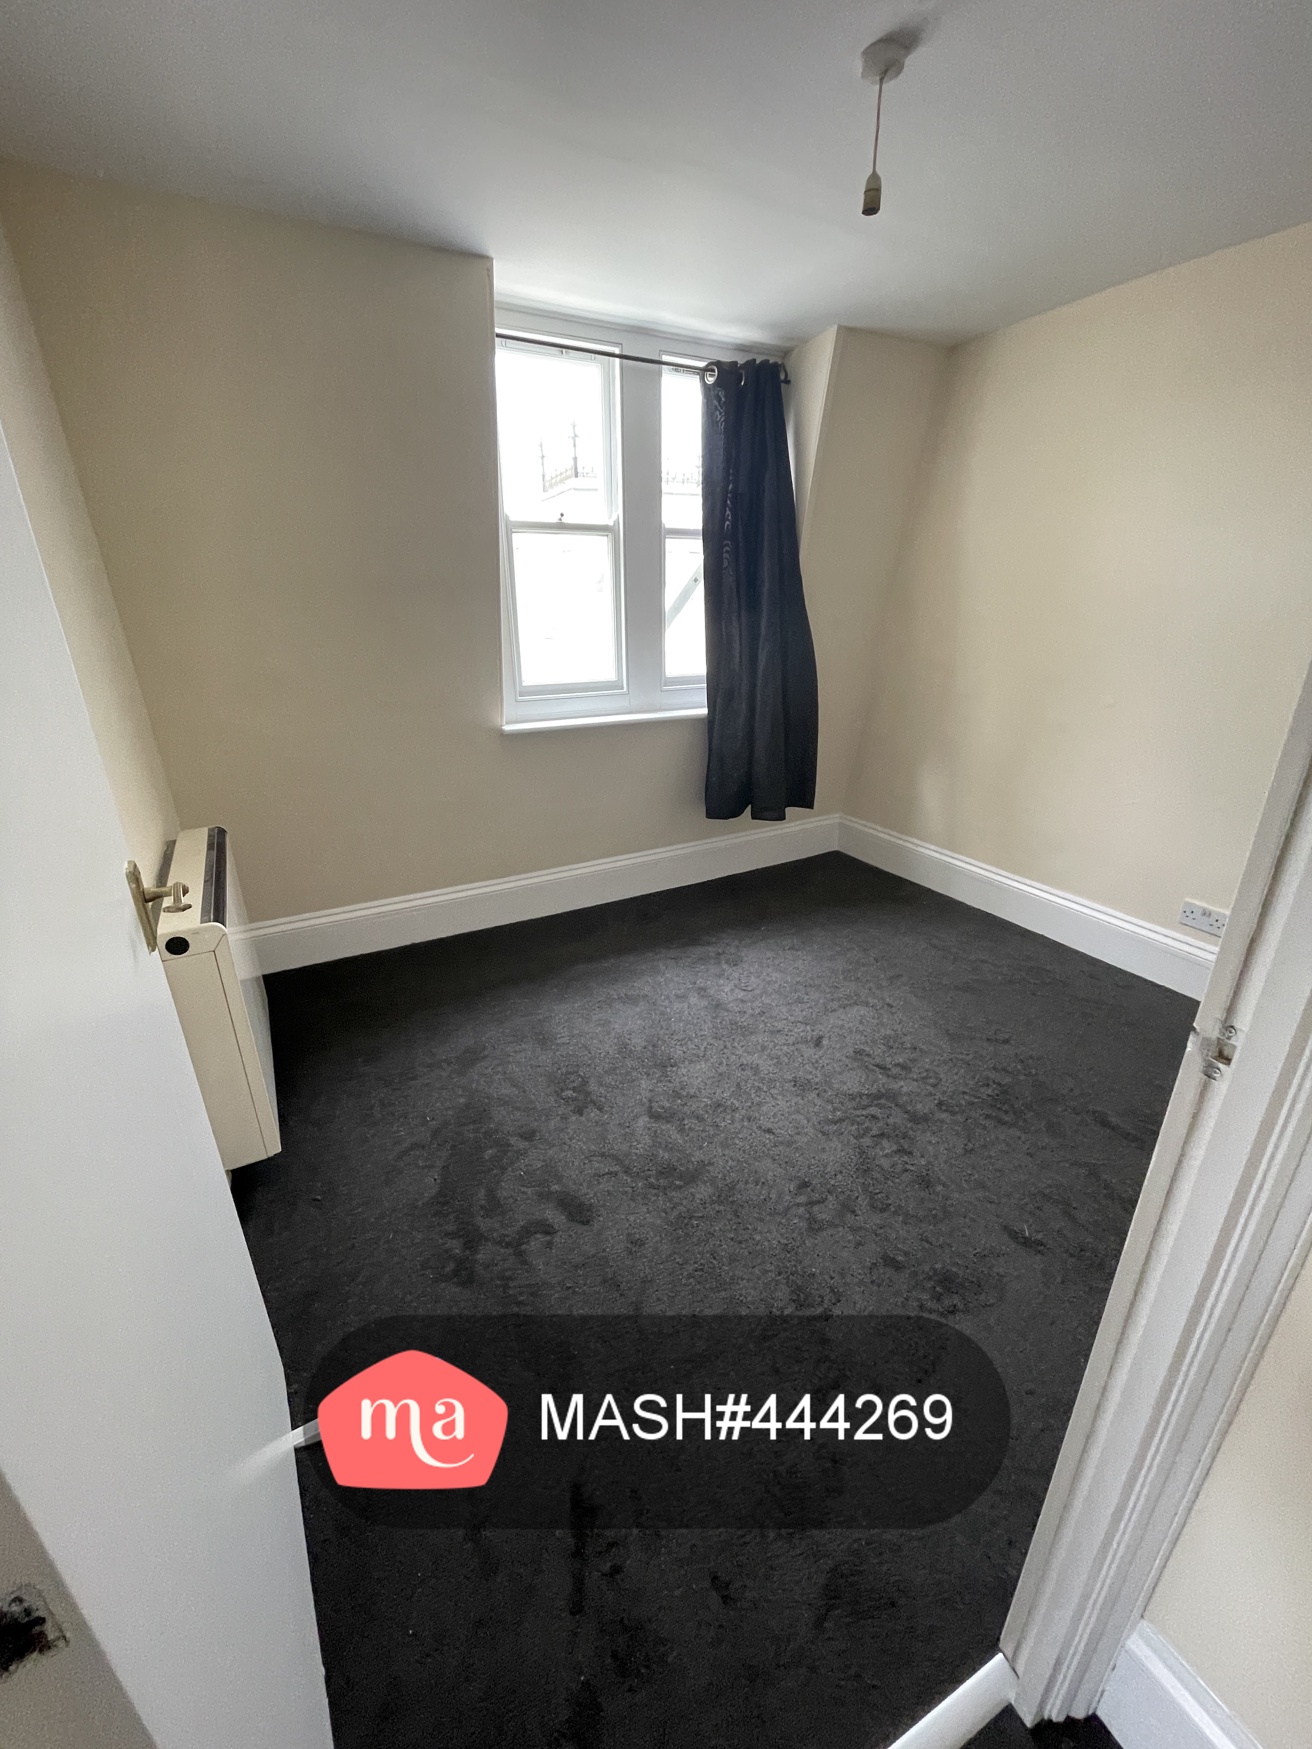 1 Bedroom Flat to rent in Brighton - Mashroom